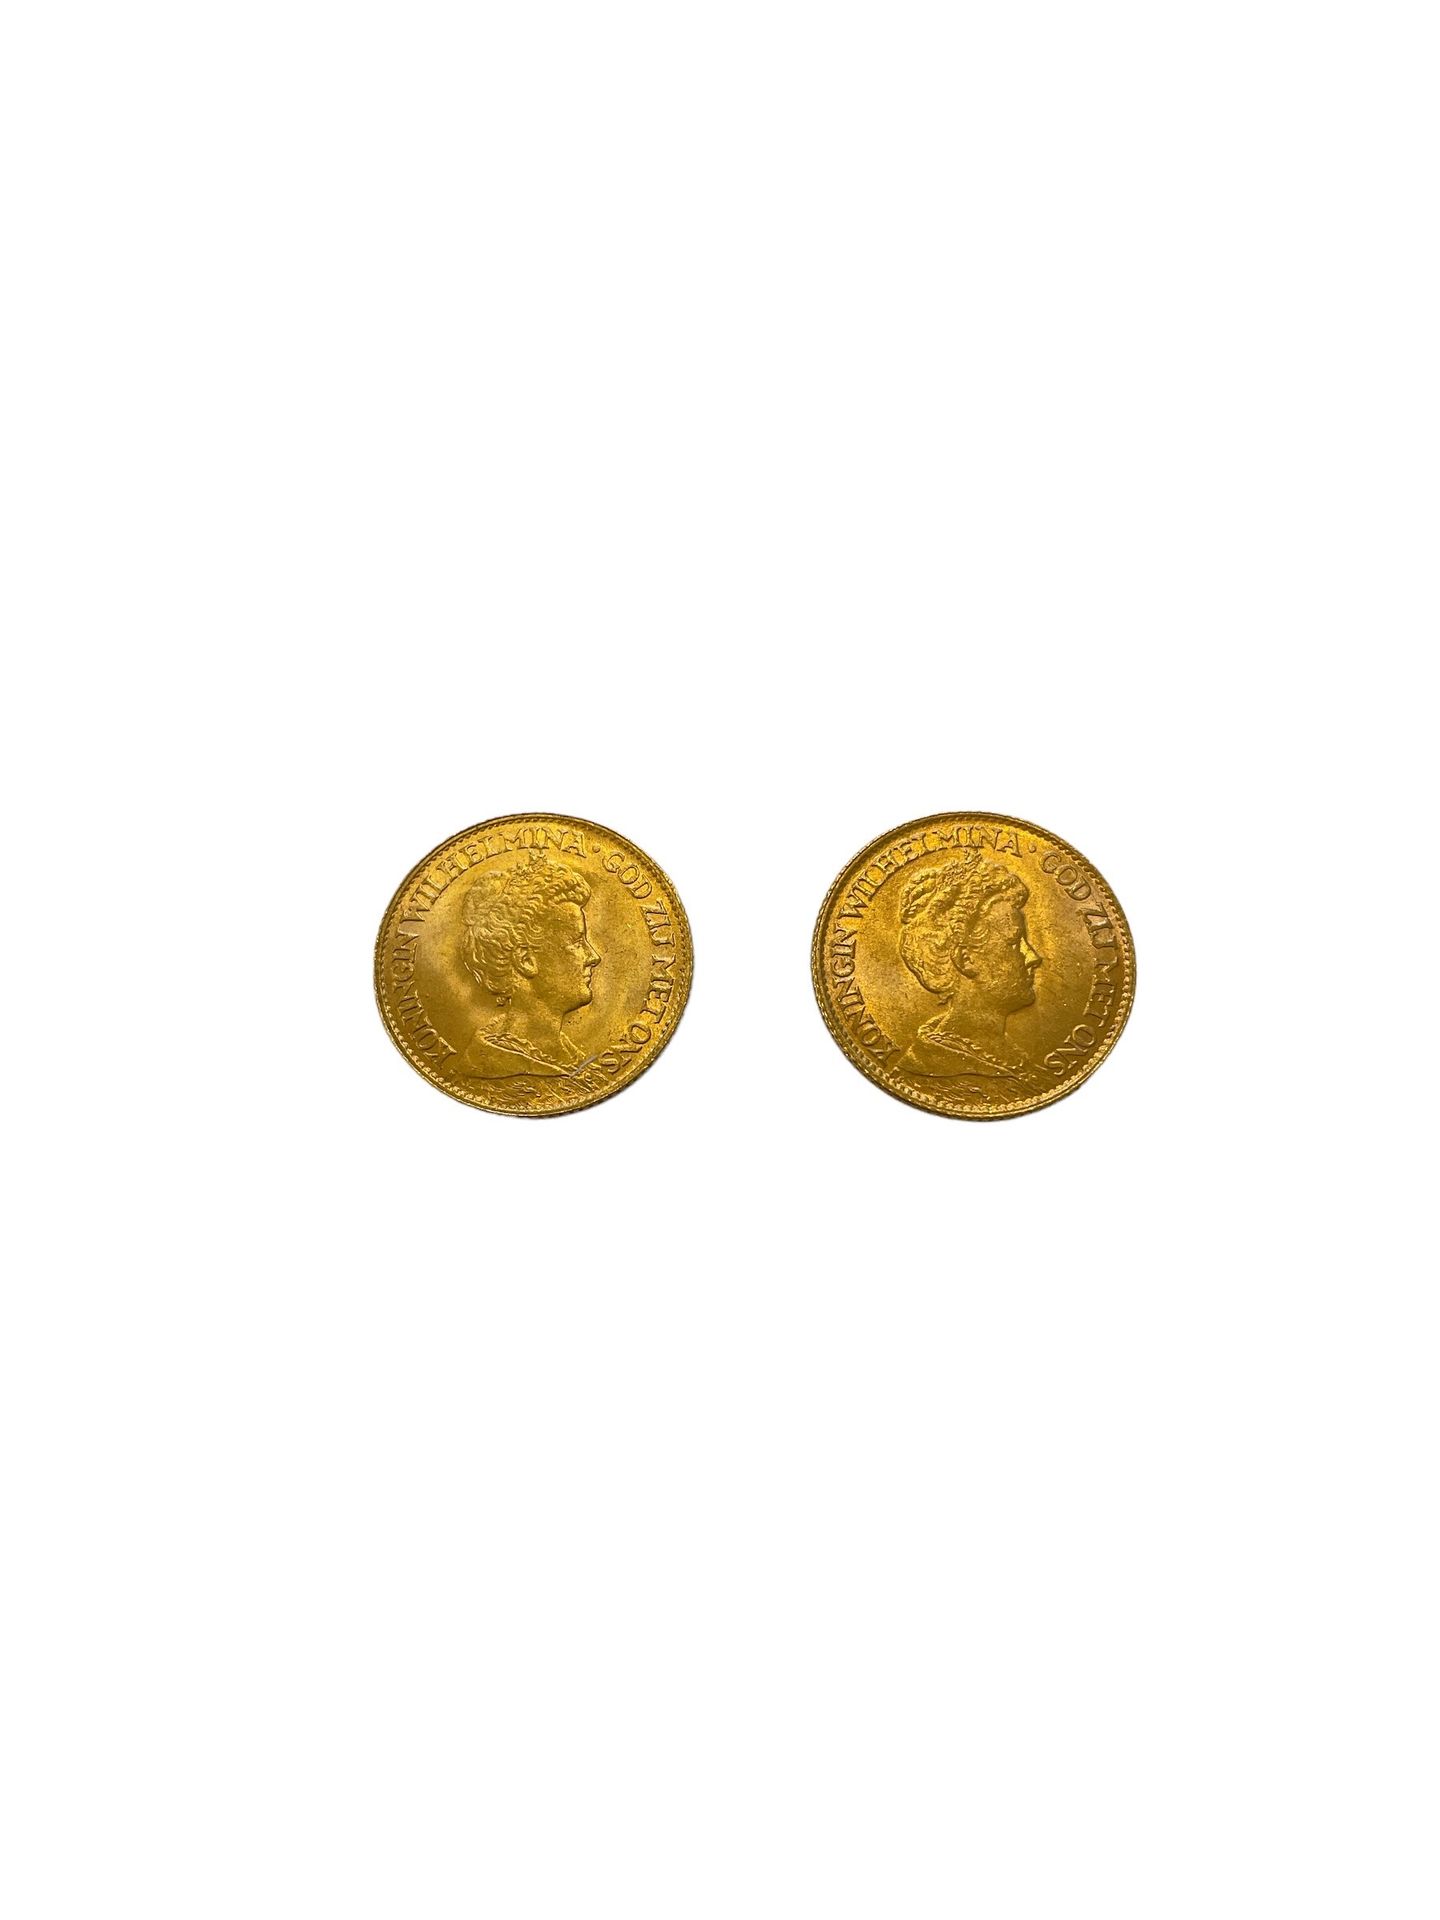 Null PAESI BASSI
2 pezzi 10 Gulden d'oro
Peso: 13,4 g